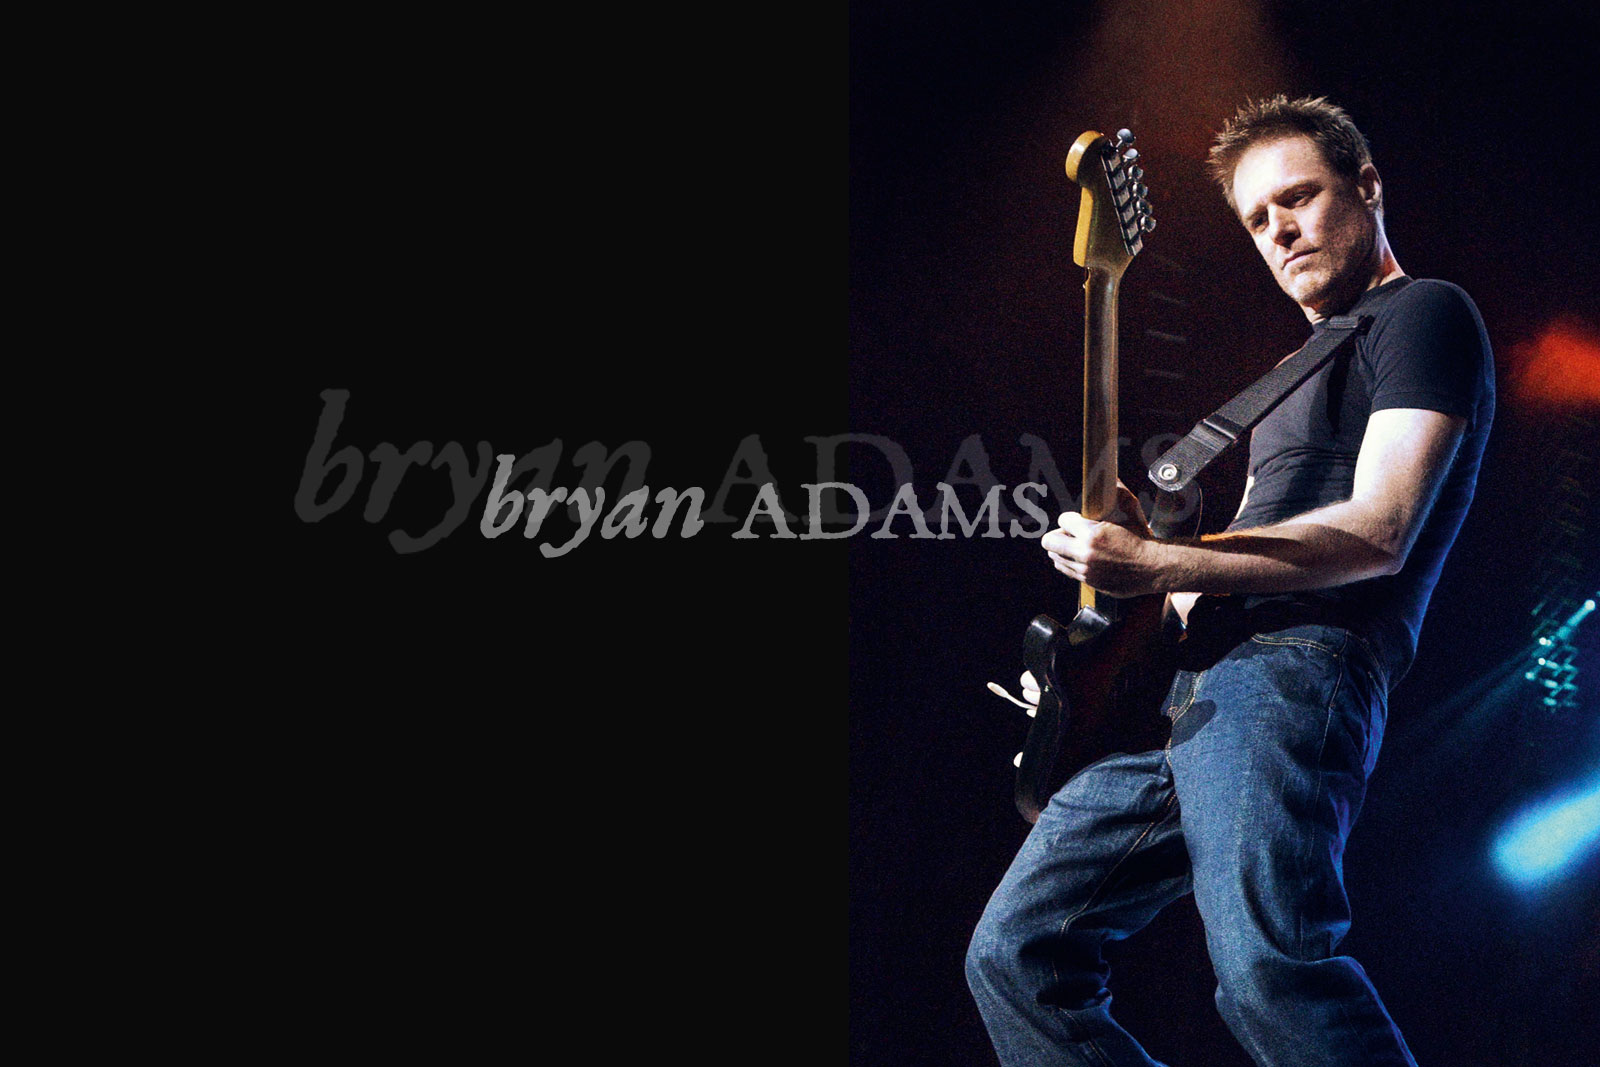 Bryan Adams Concert Tickets Deal Off Concerts In